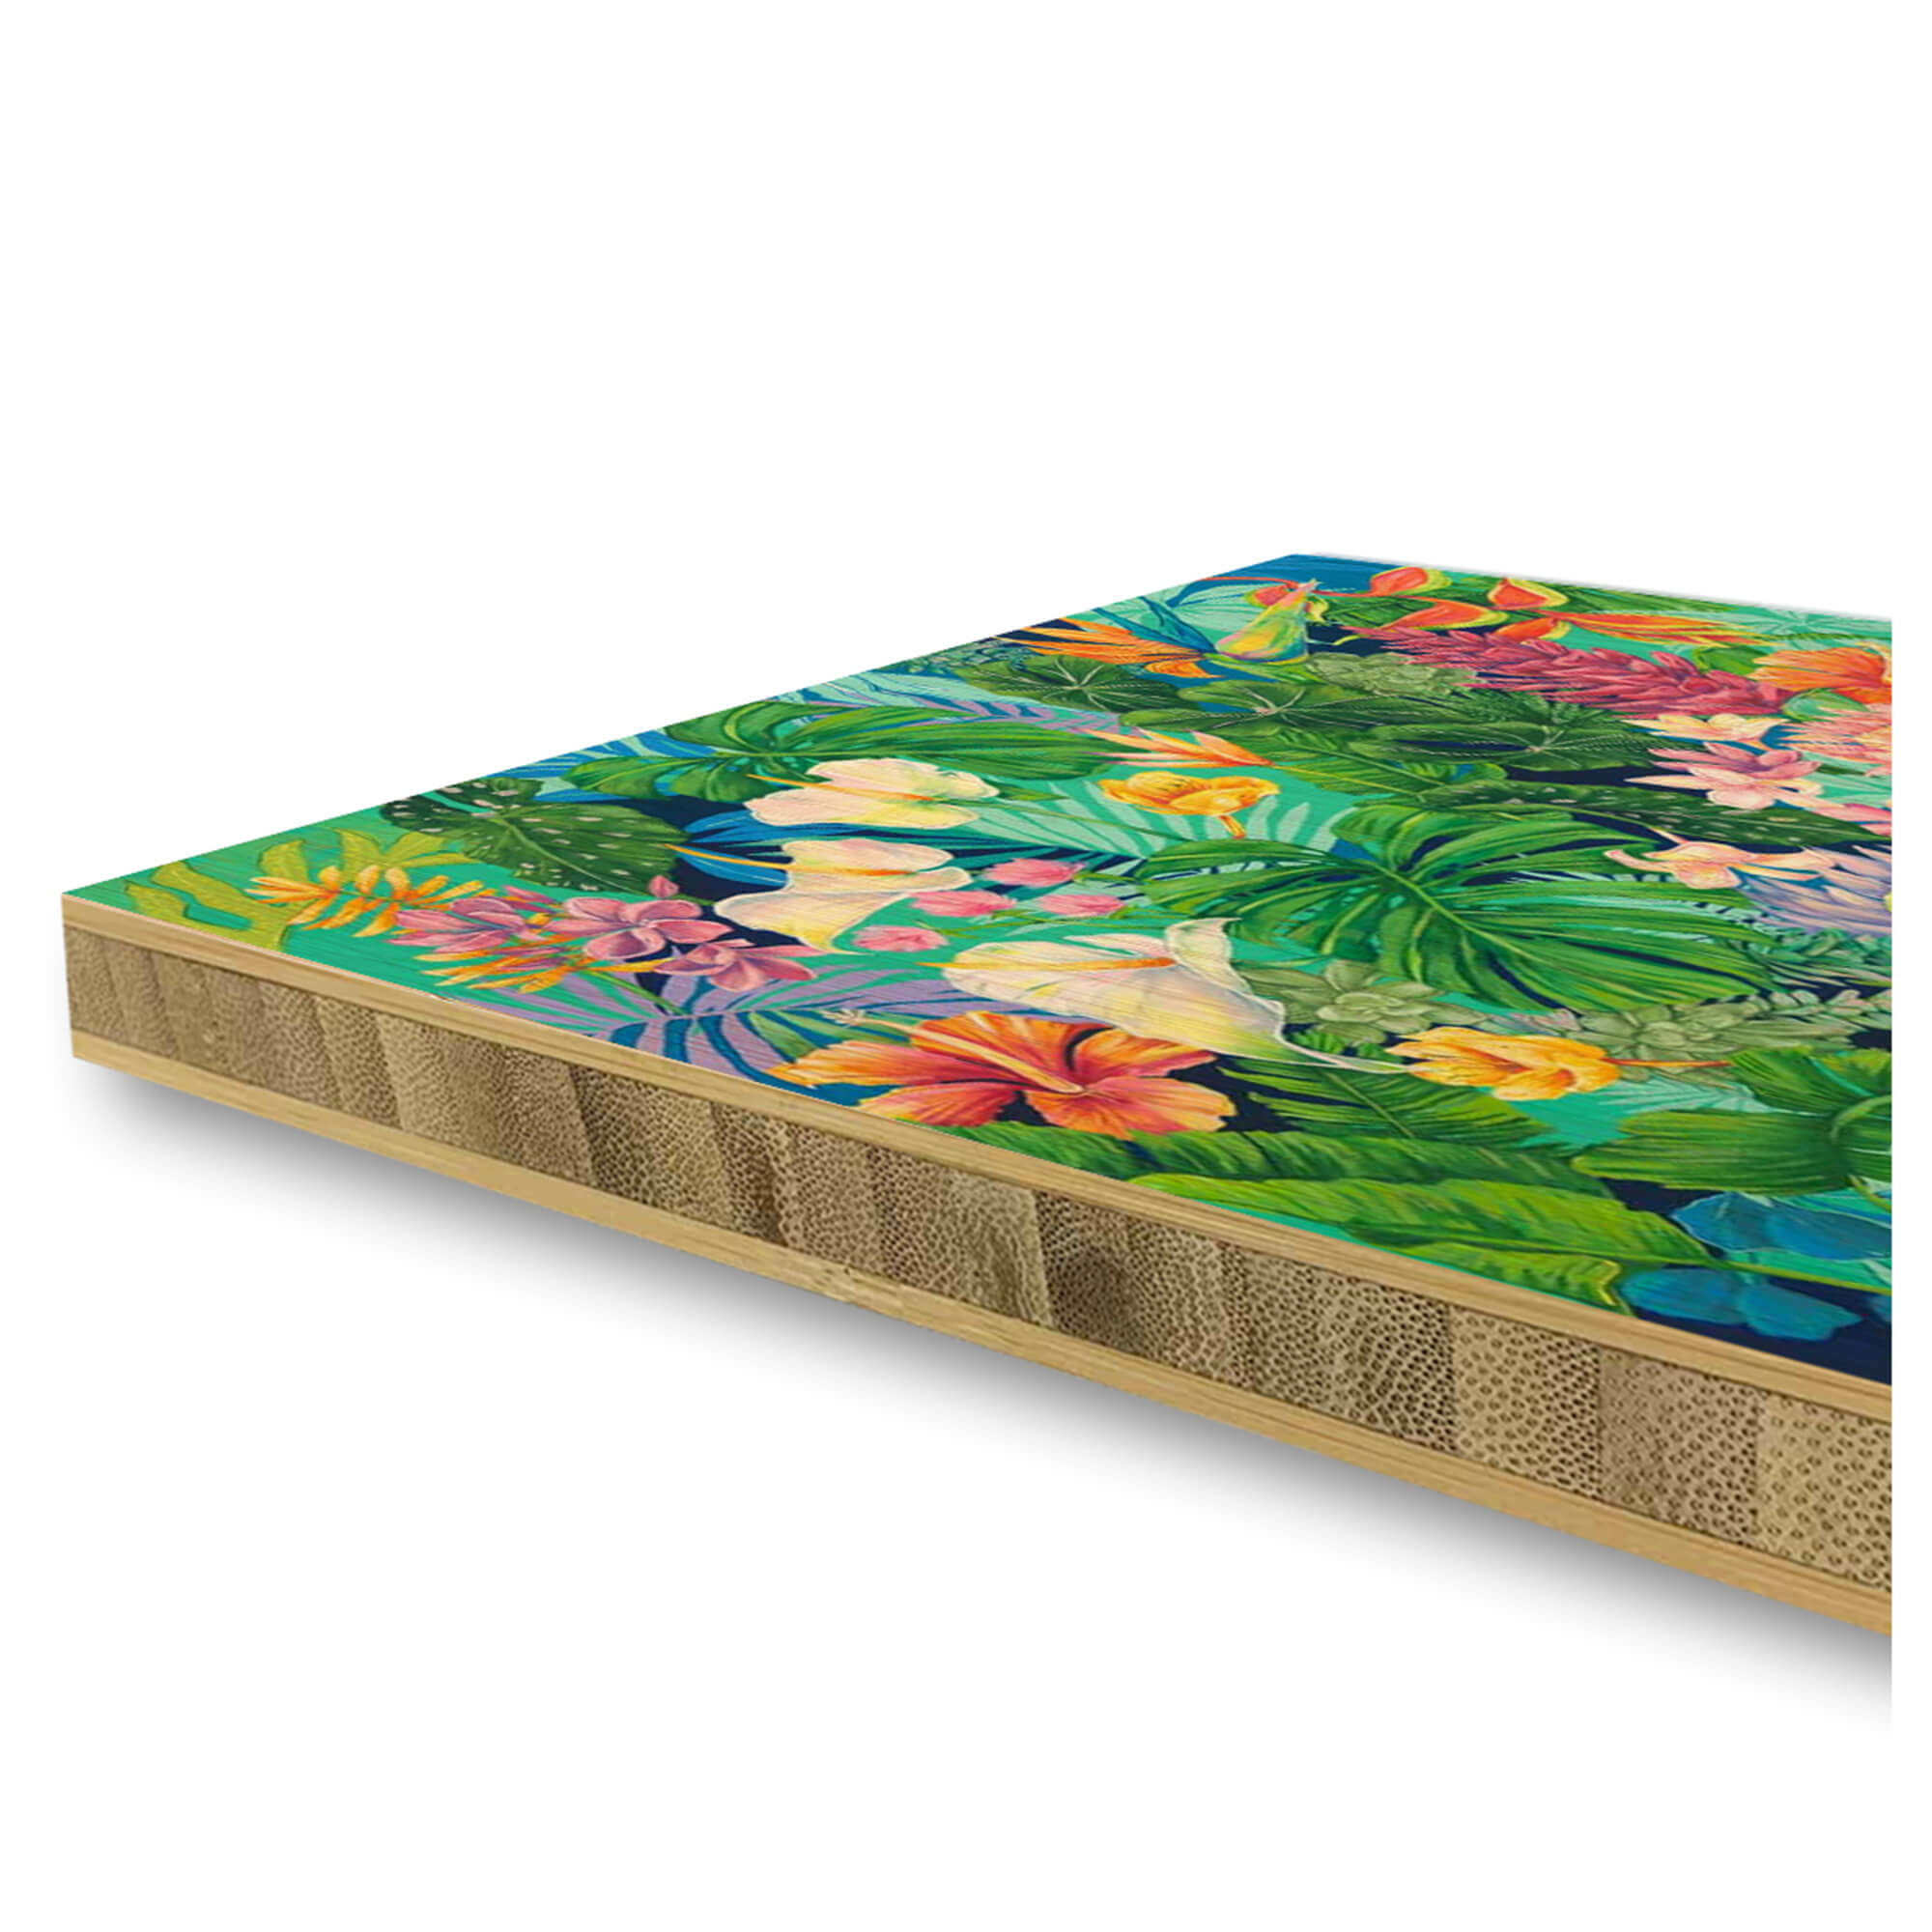 Bamboo print edge detail of artwork Jungle Dreams by Hawaii artist Lauren Roth